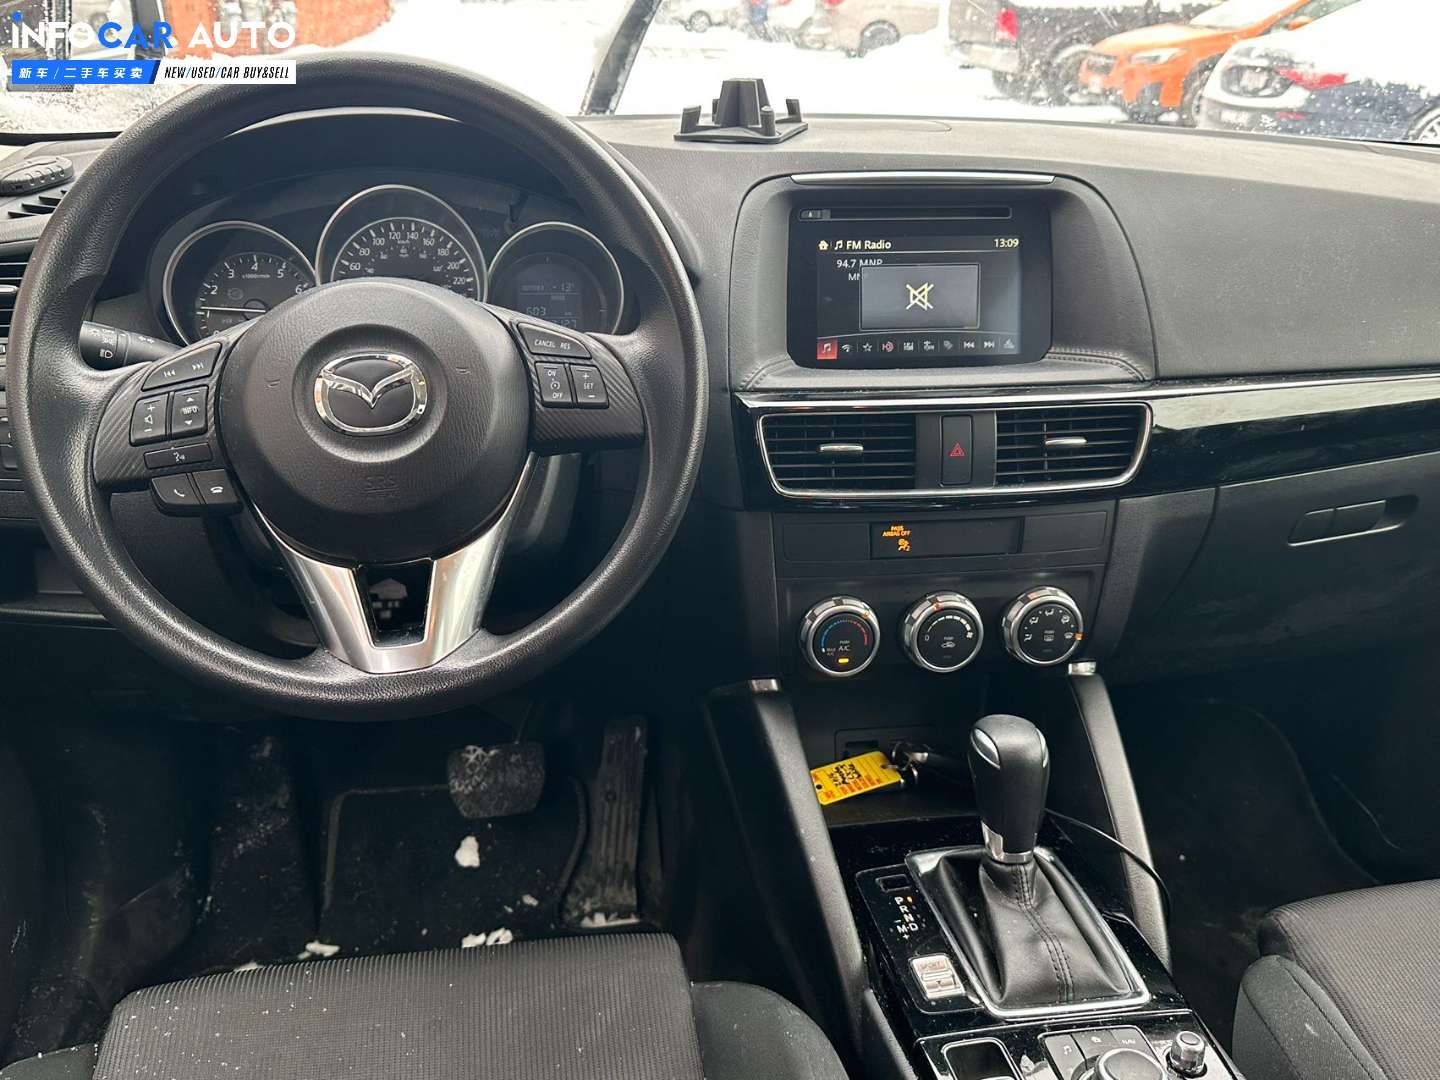 2016 Mazda CX-5 null - INFOCAR - Toronto Auto Trading Platform